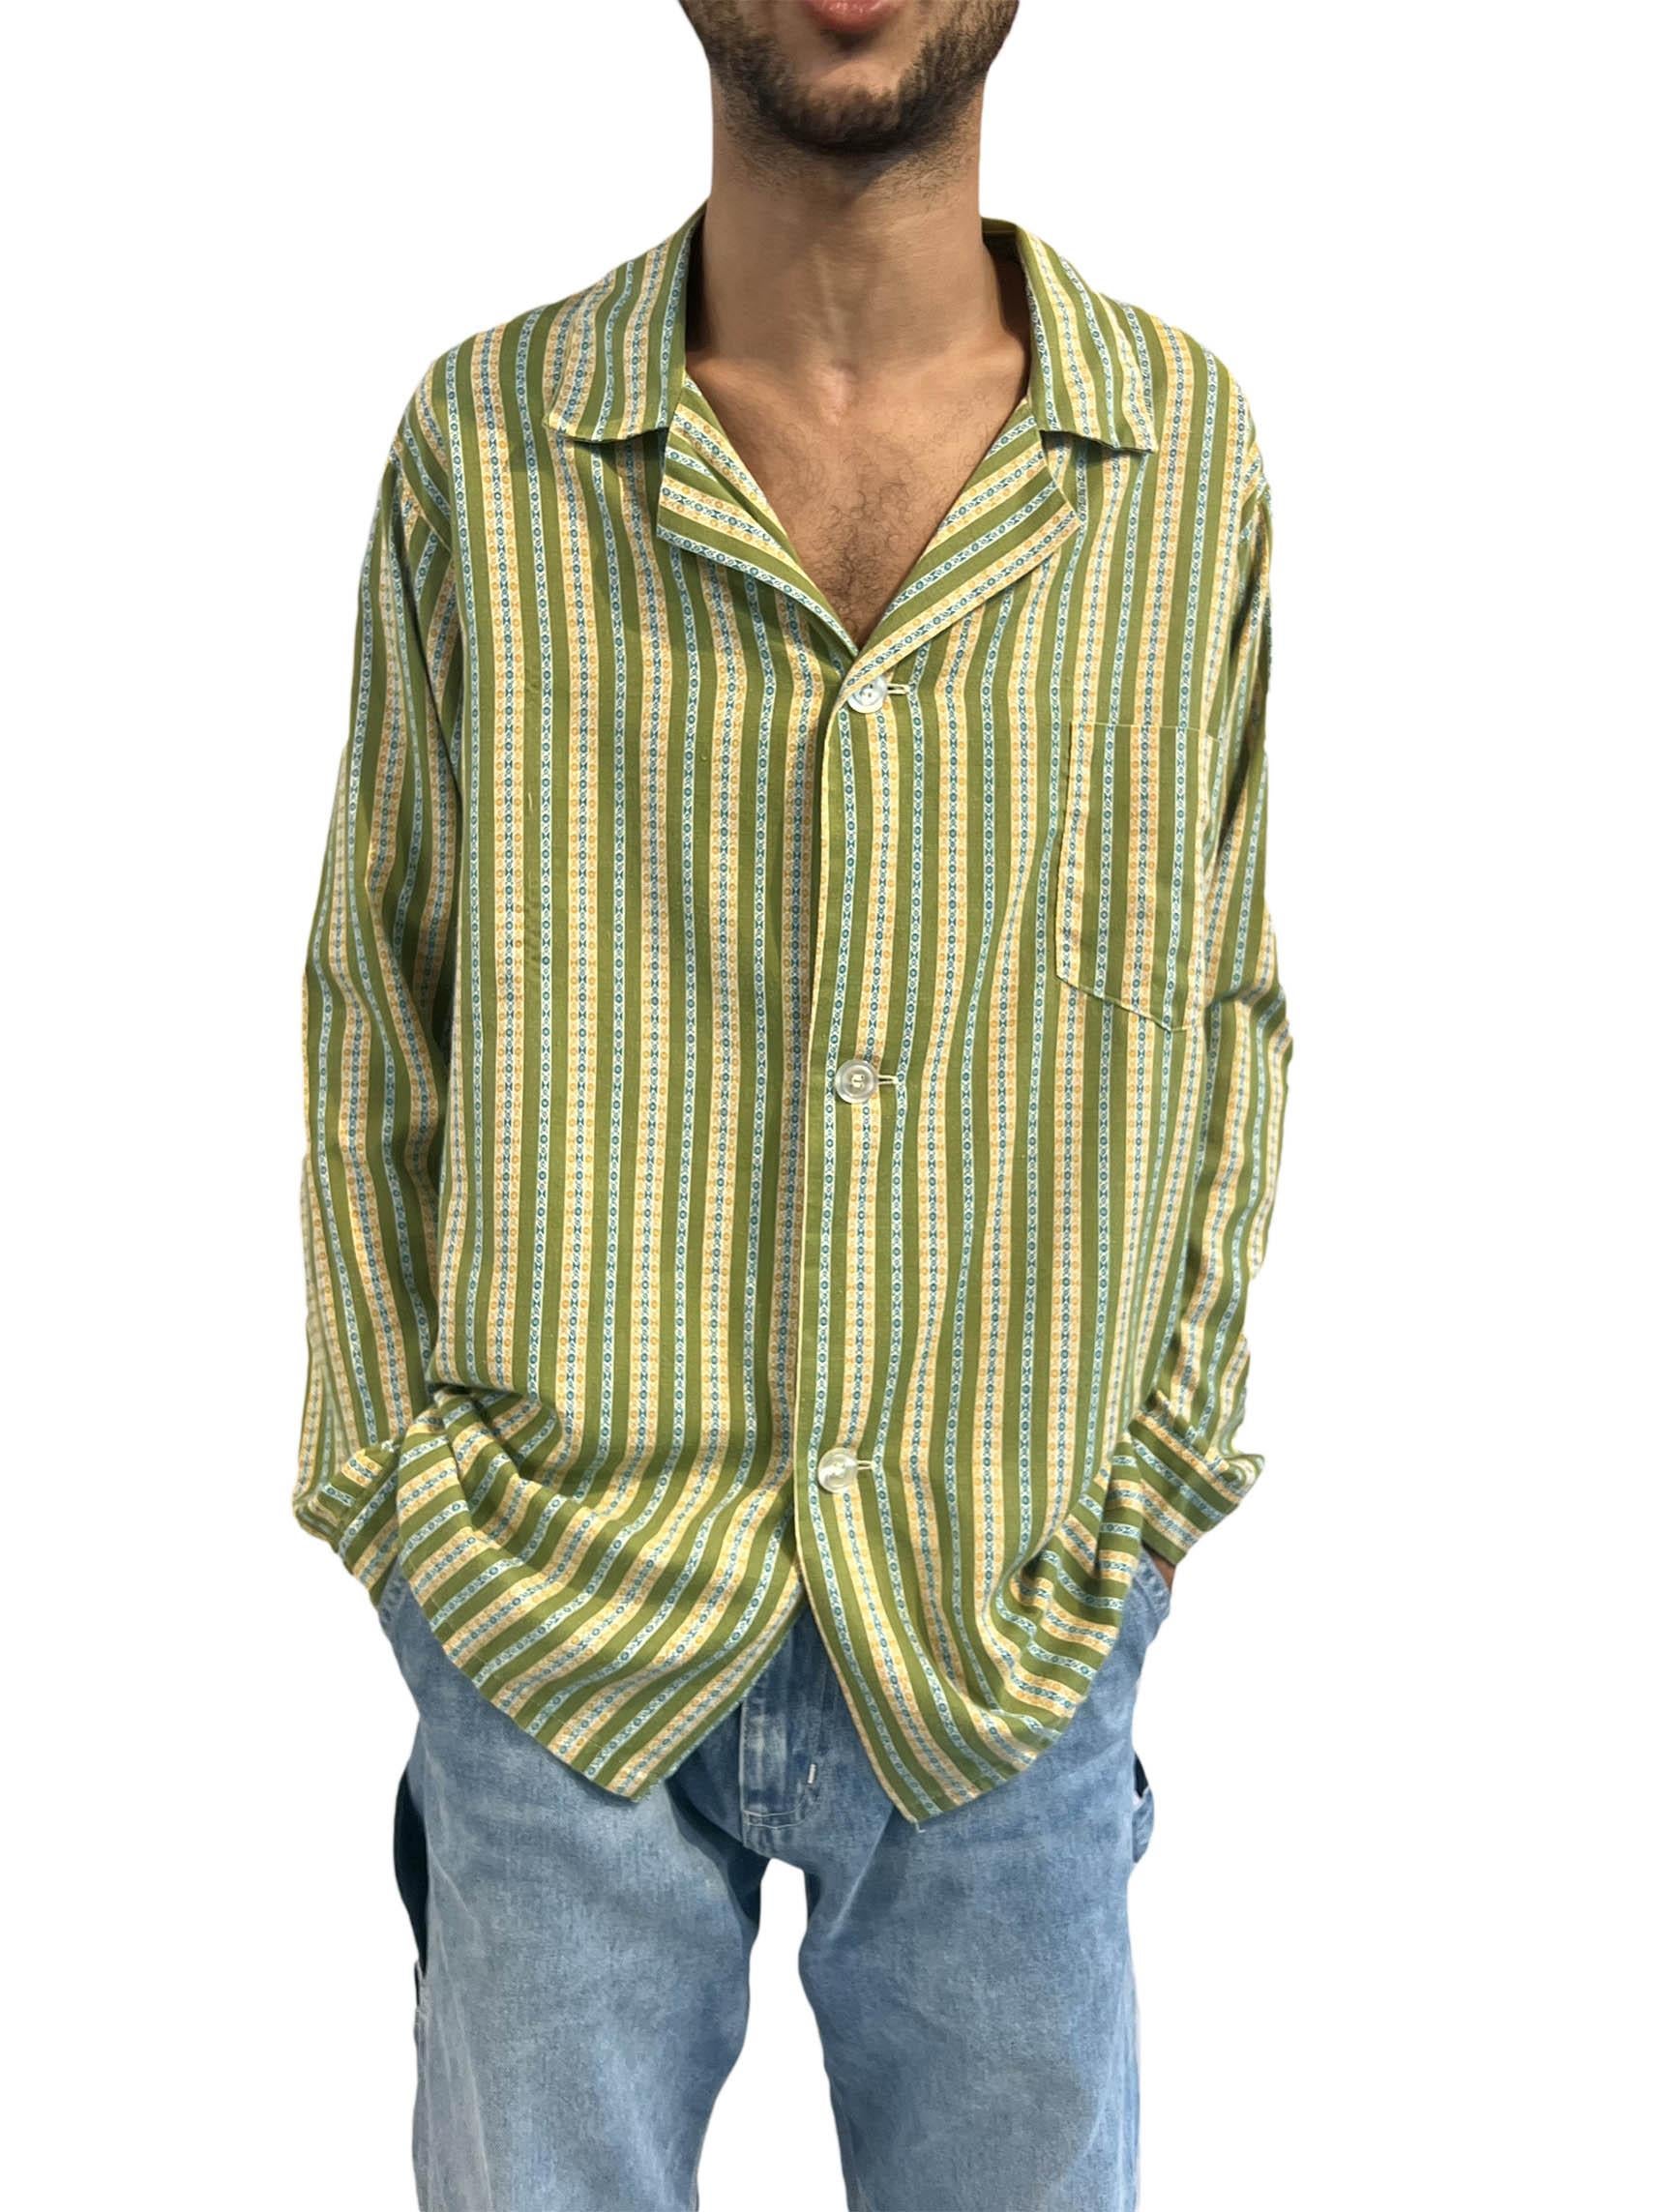 Men's 1950S Weldon Green & Yellow Striped Cotton Soft Shirt